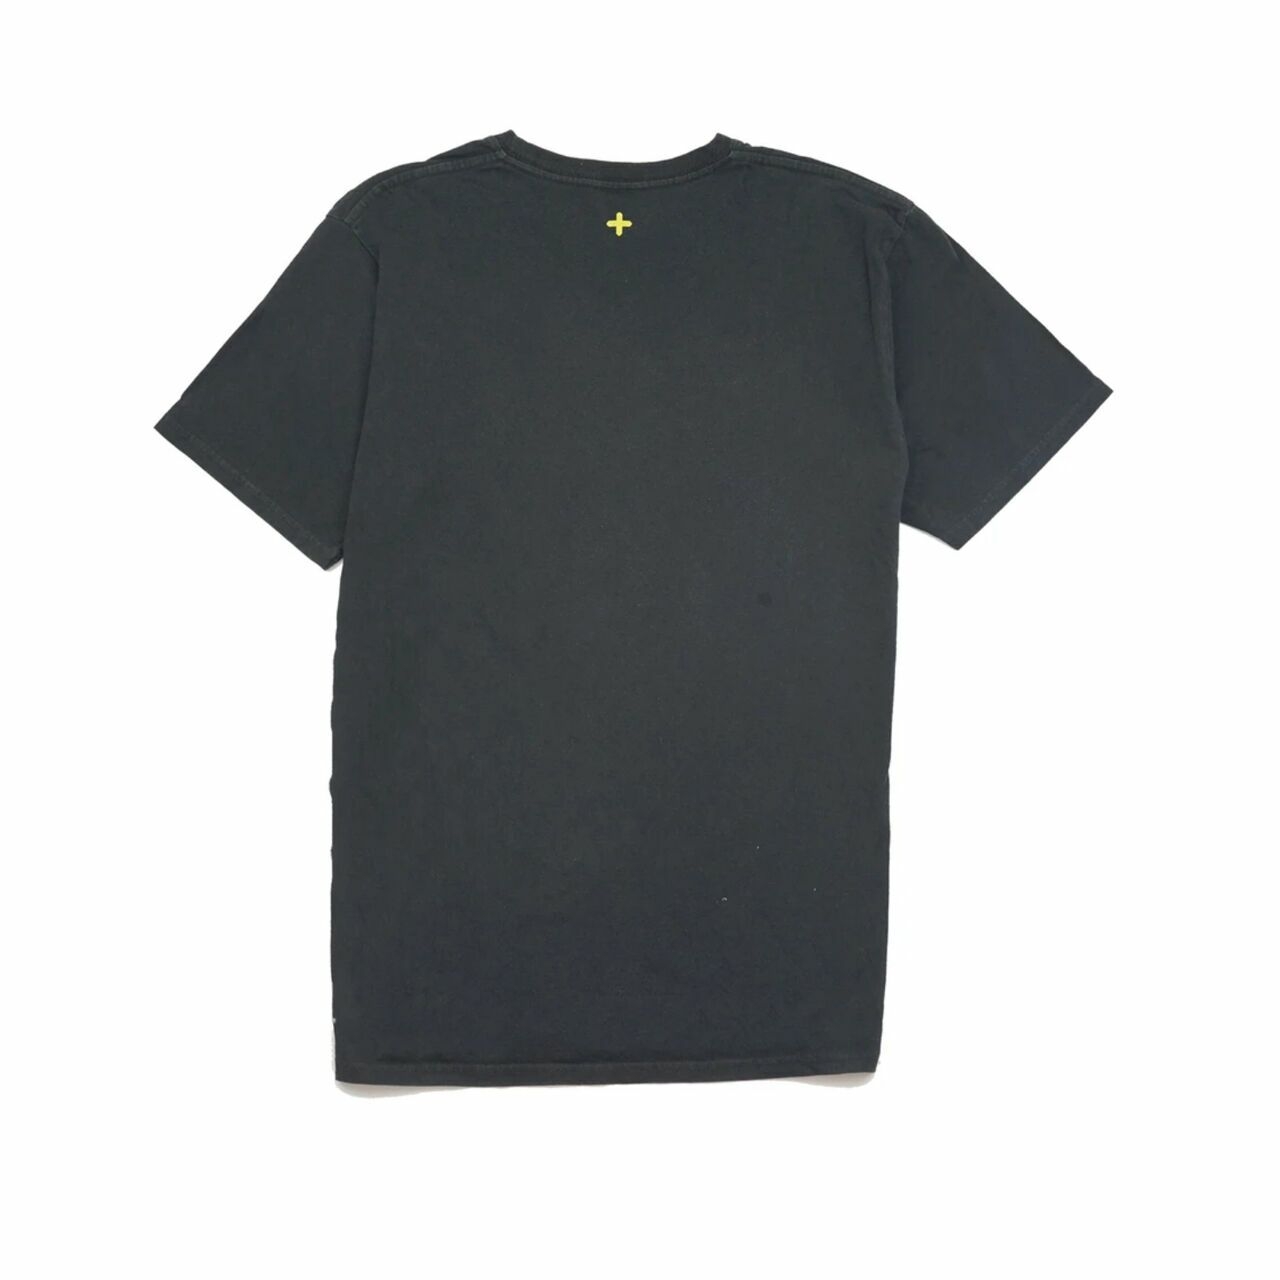 Head Porter Plus x Fragment Design Black "Summer of HPP" Sweatshirt